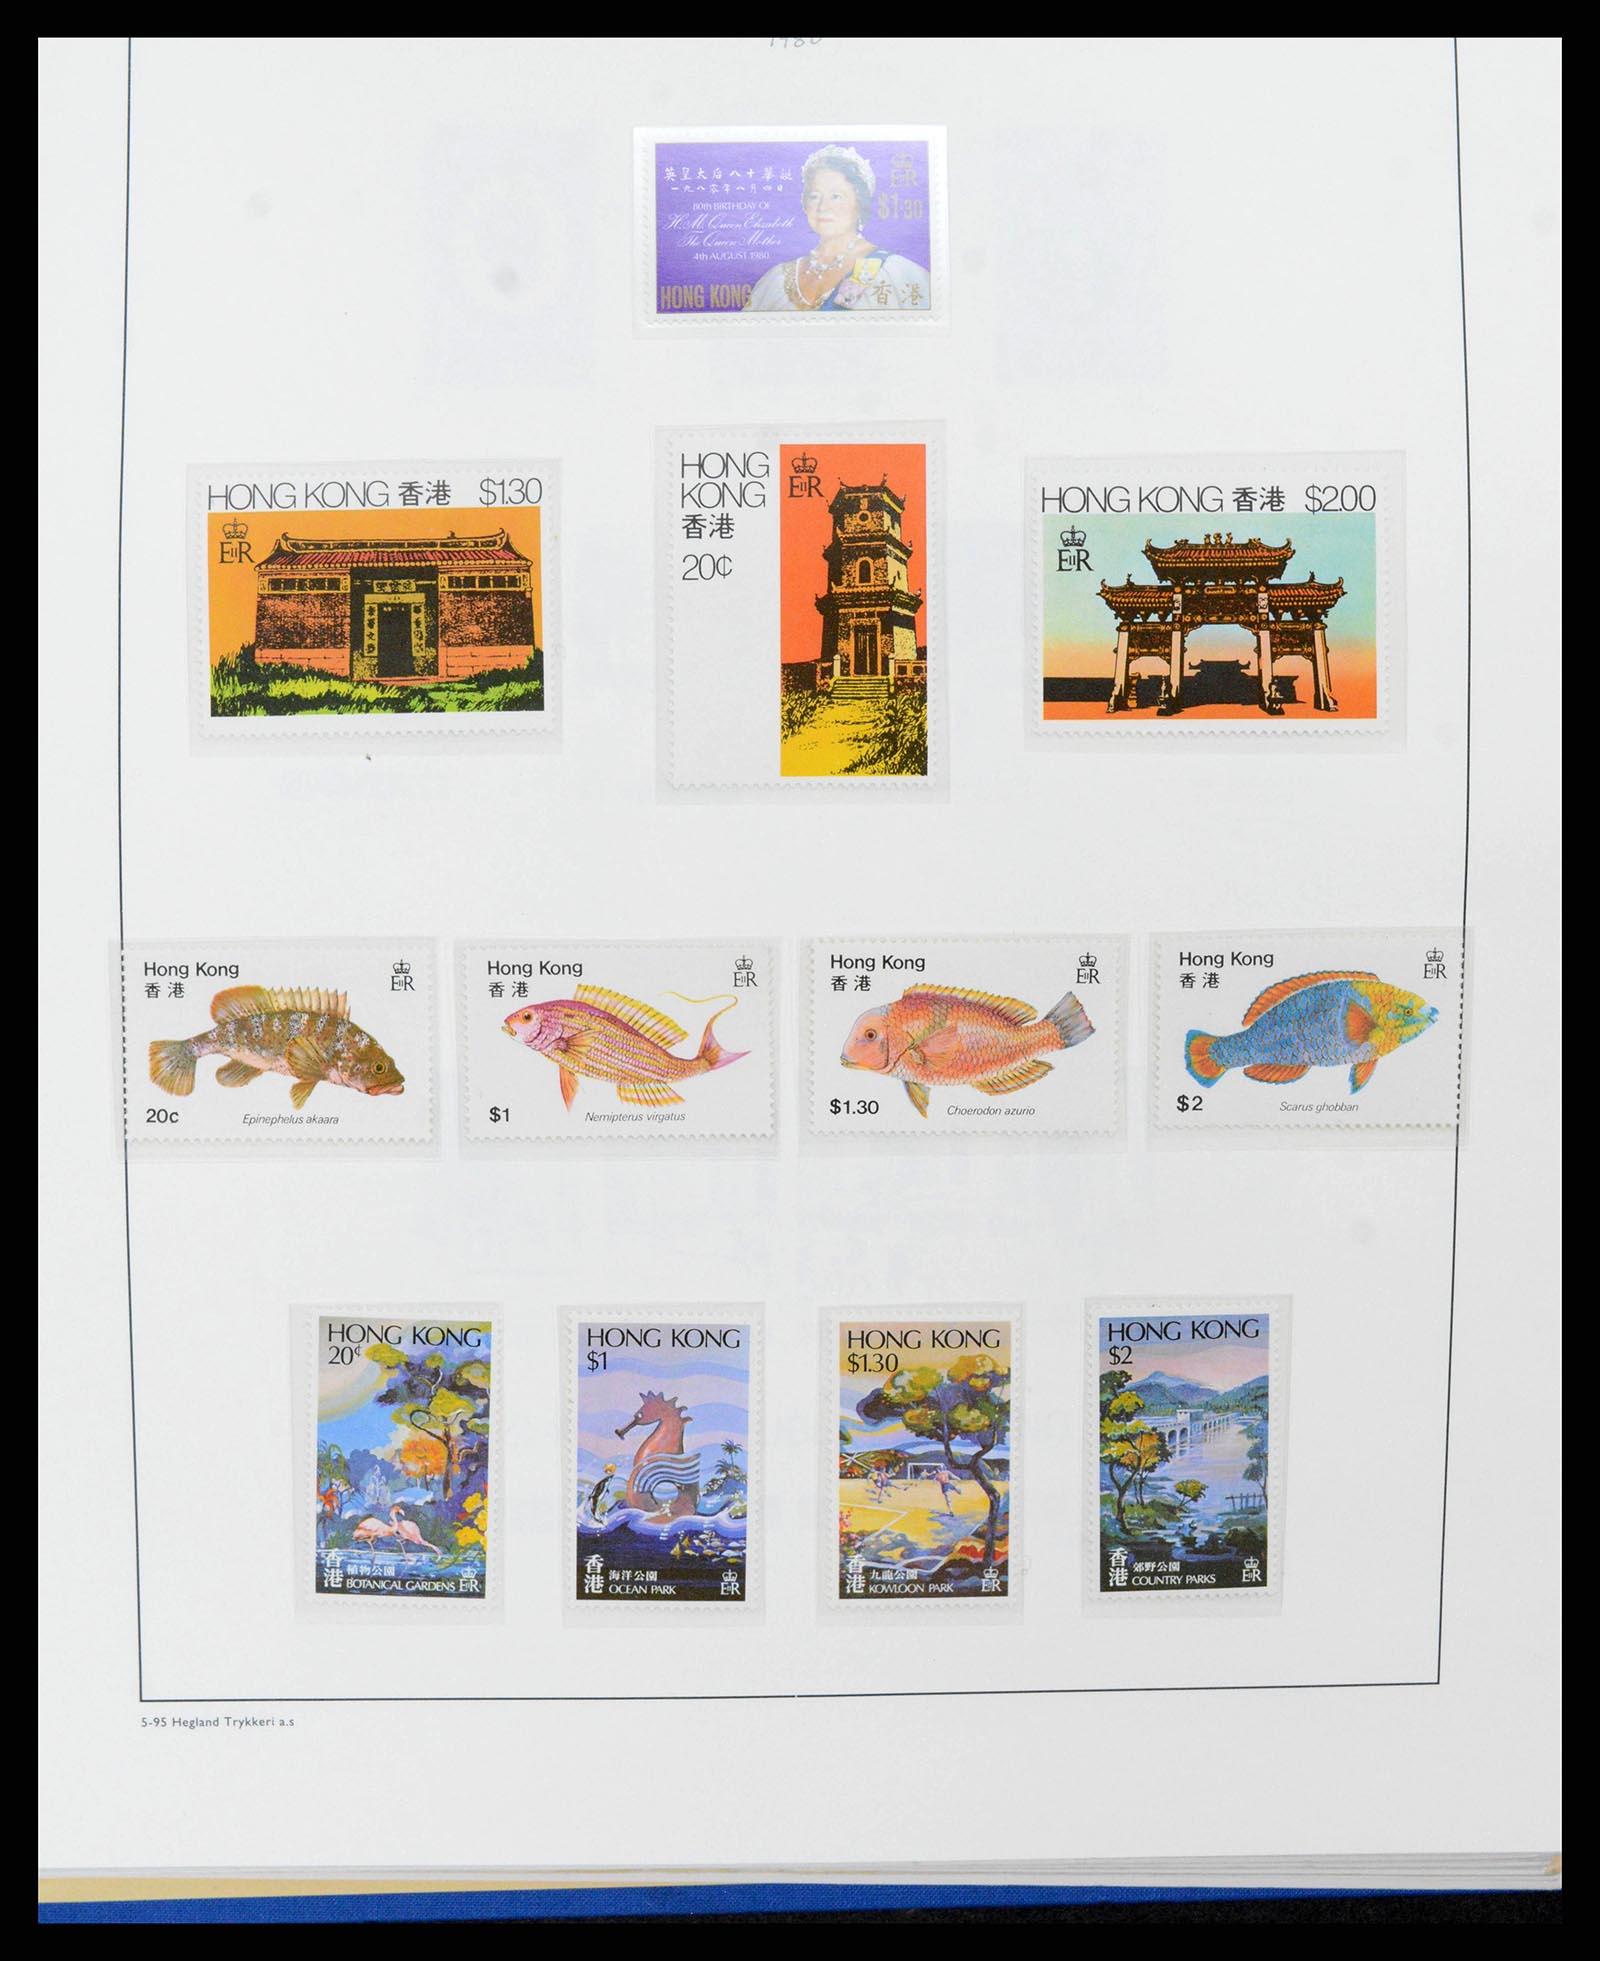 37955 0075 - Stamp collection 37955 Hong Kong supercollection 1862-2007.